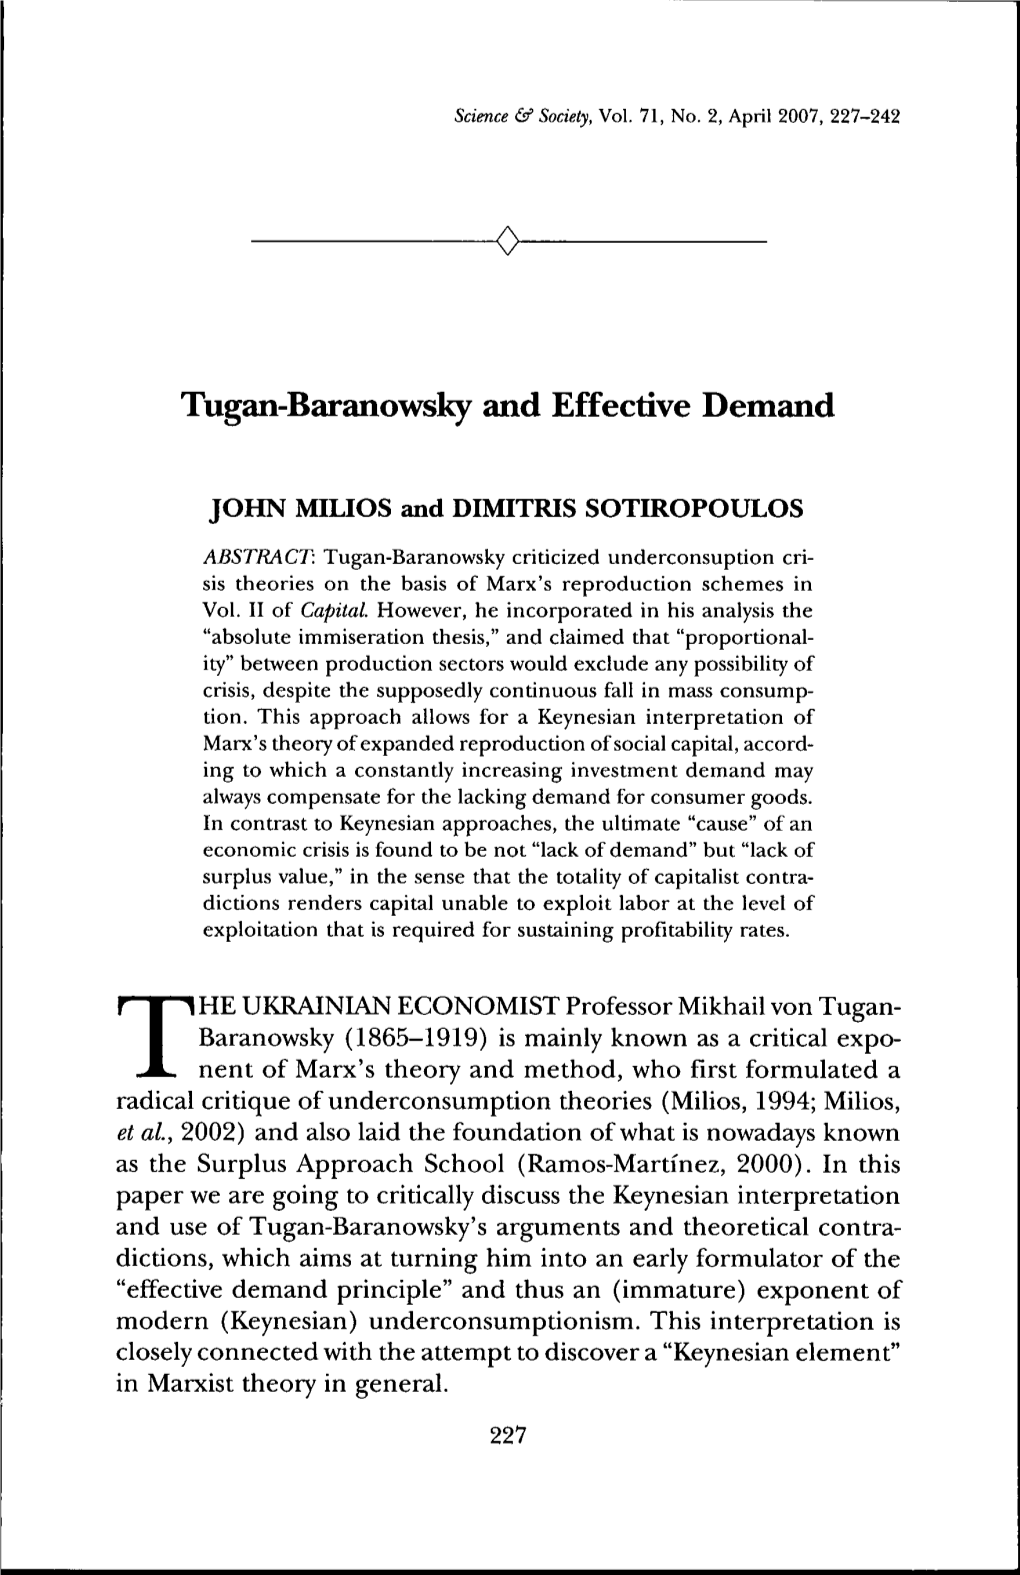 Tugan-Baranowsky and Effective Demand